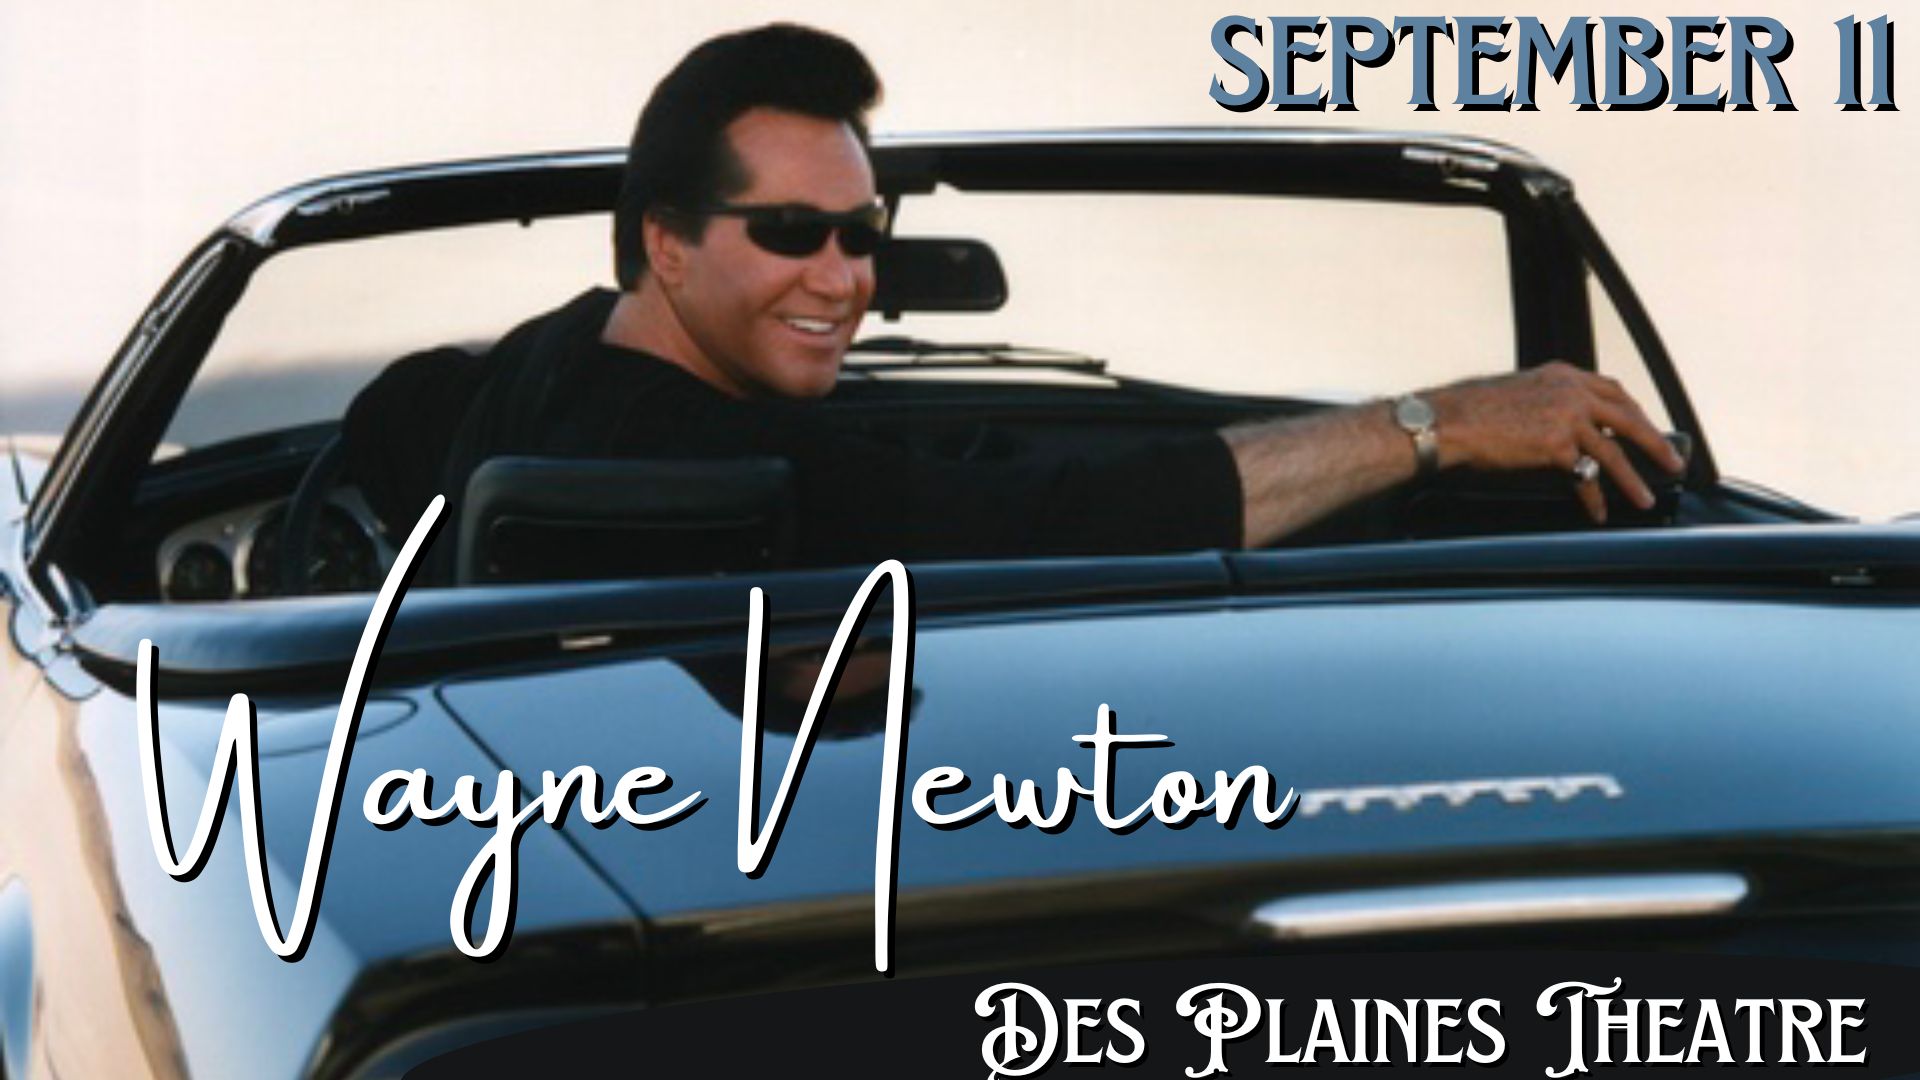 Wayne Newton at Des Plaines Theatre, September 11, Des Plaines, Illinois, United States